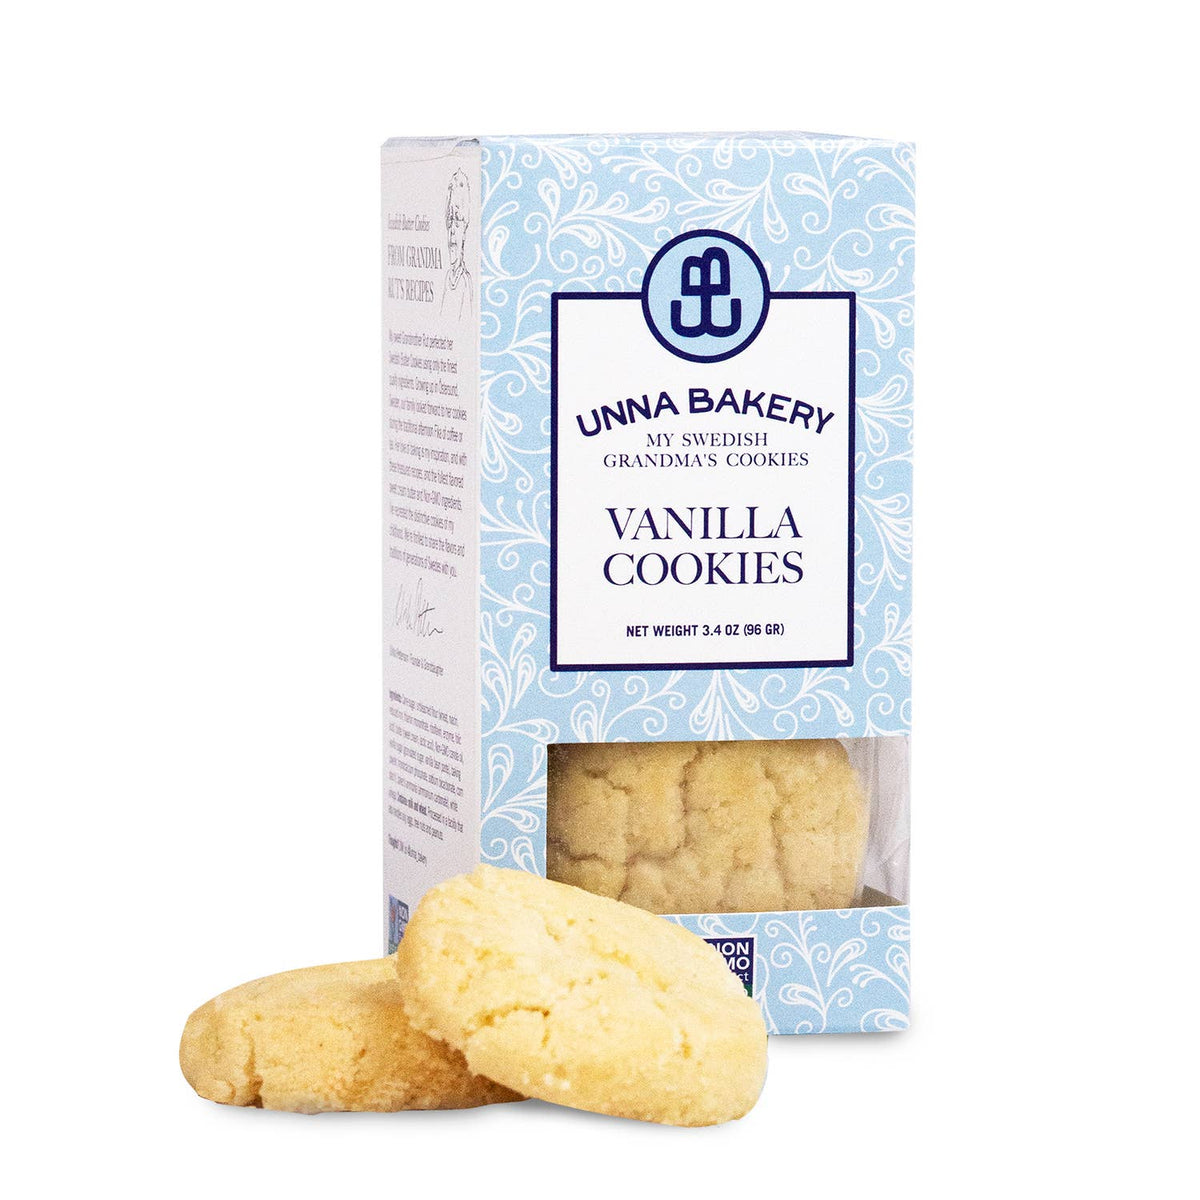 Vanilla Dream Gourmet Cookie Box, perfect sweet treat!